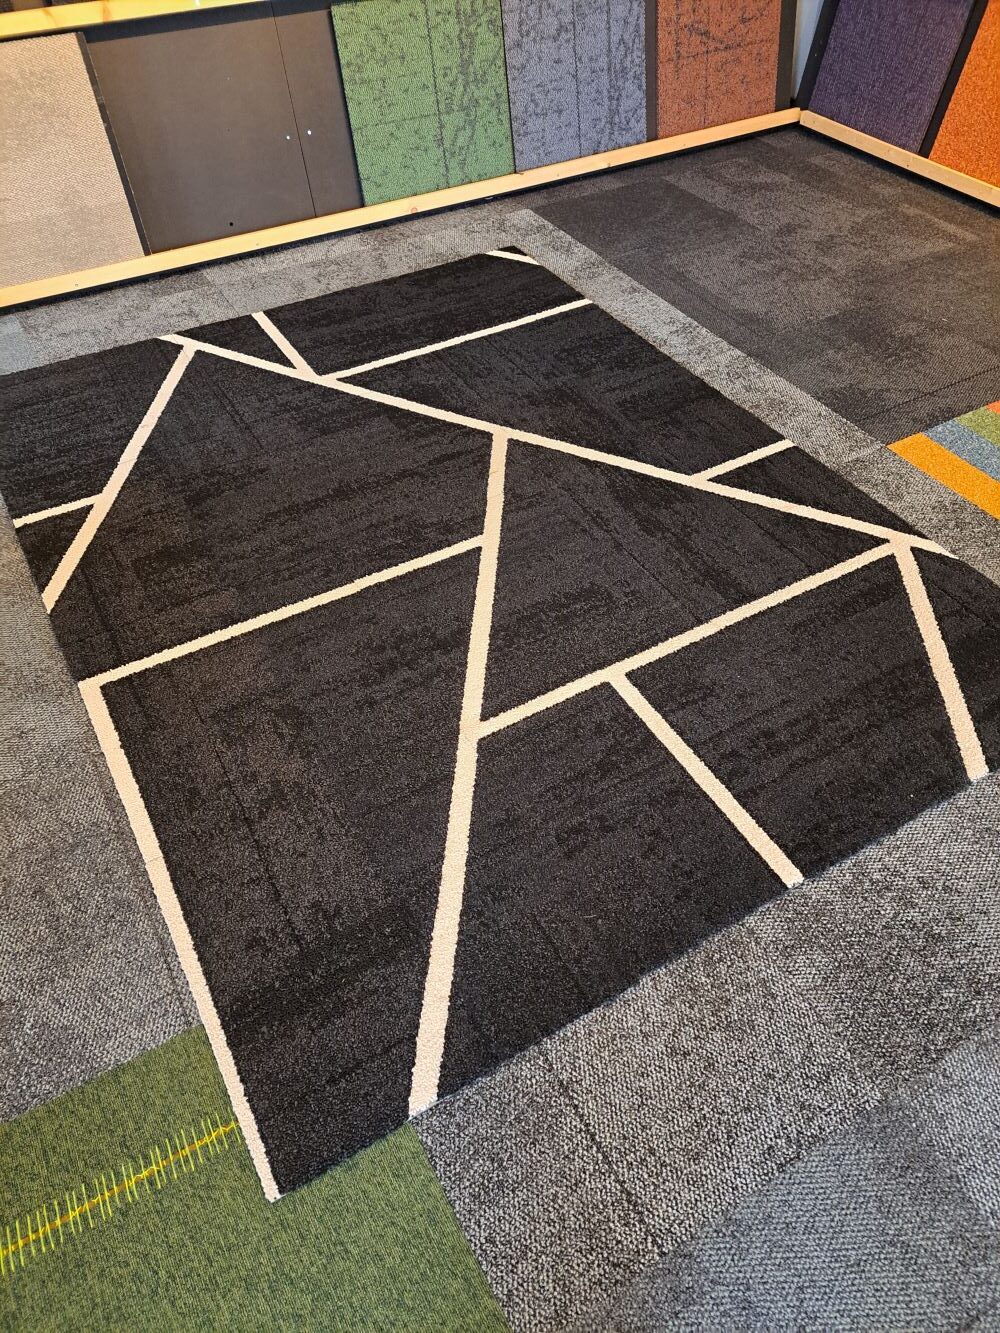 karpet 2×1,5m tapijttegels interface zwart